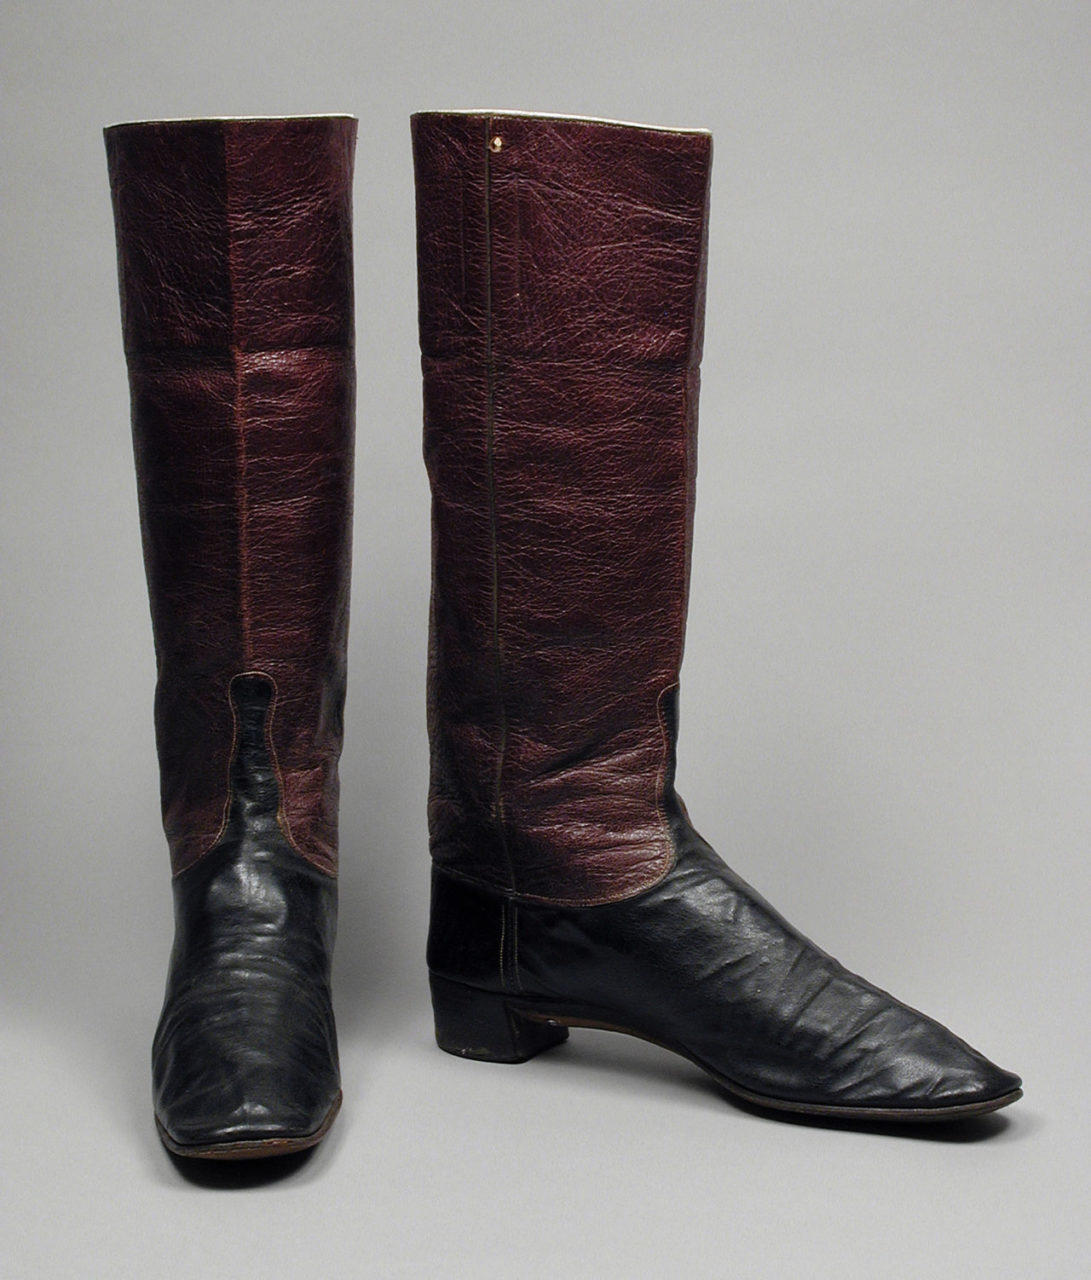 Pair of Man's dress Wellington Boots